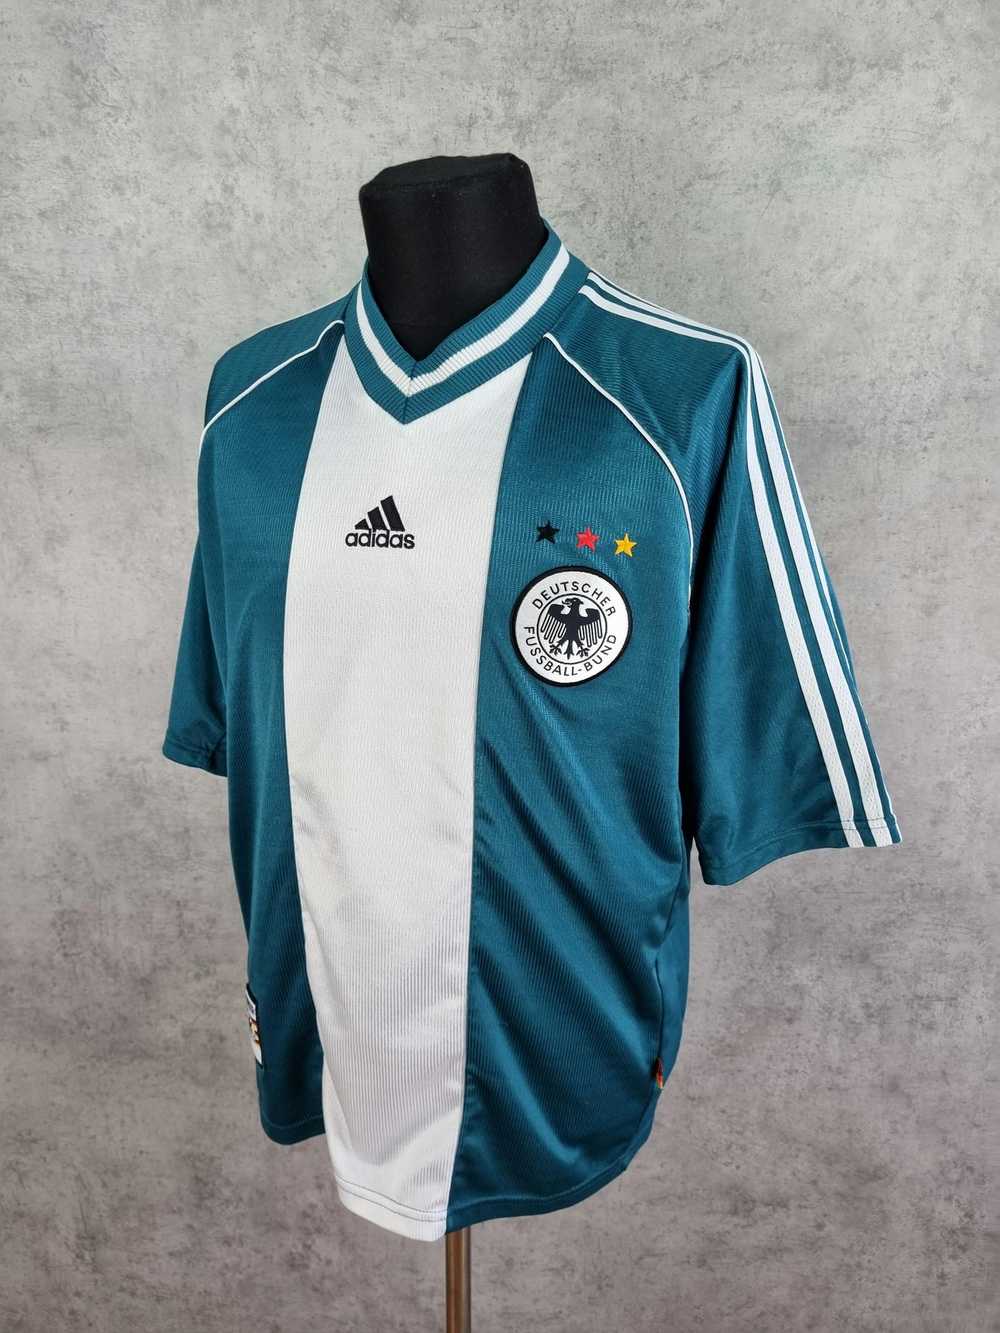 Adidas × Jersey × Soccer Jersey 90s ADIDAS Vintag… - image 2